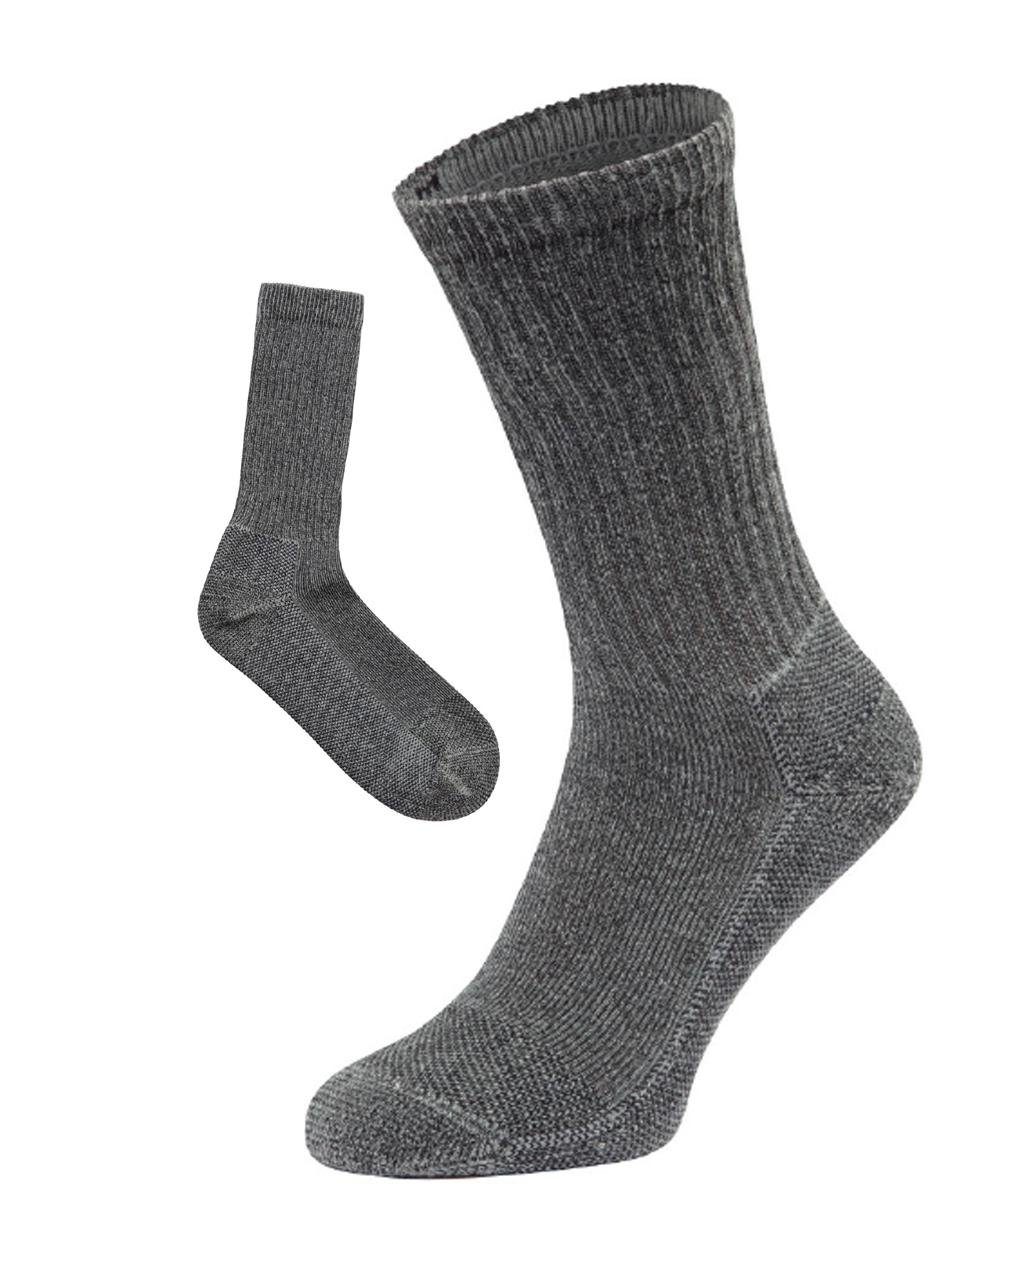 FOL Work Gear Socks - Calf Length Pack of 3